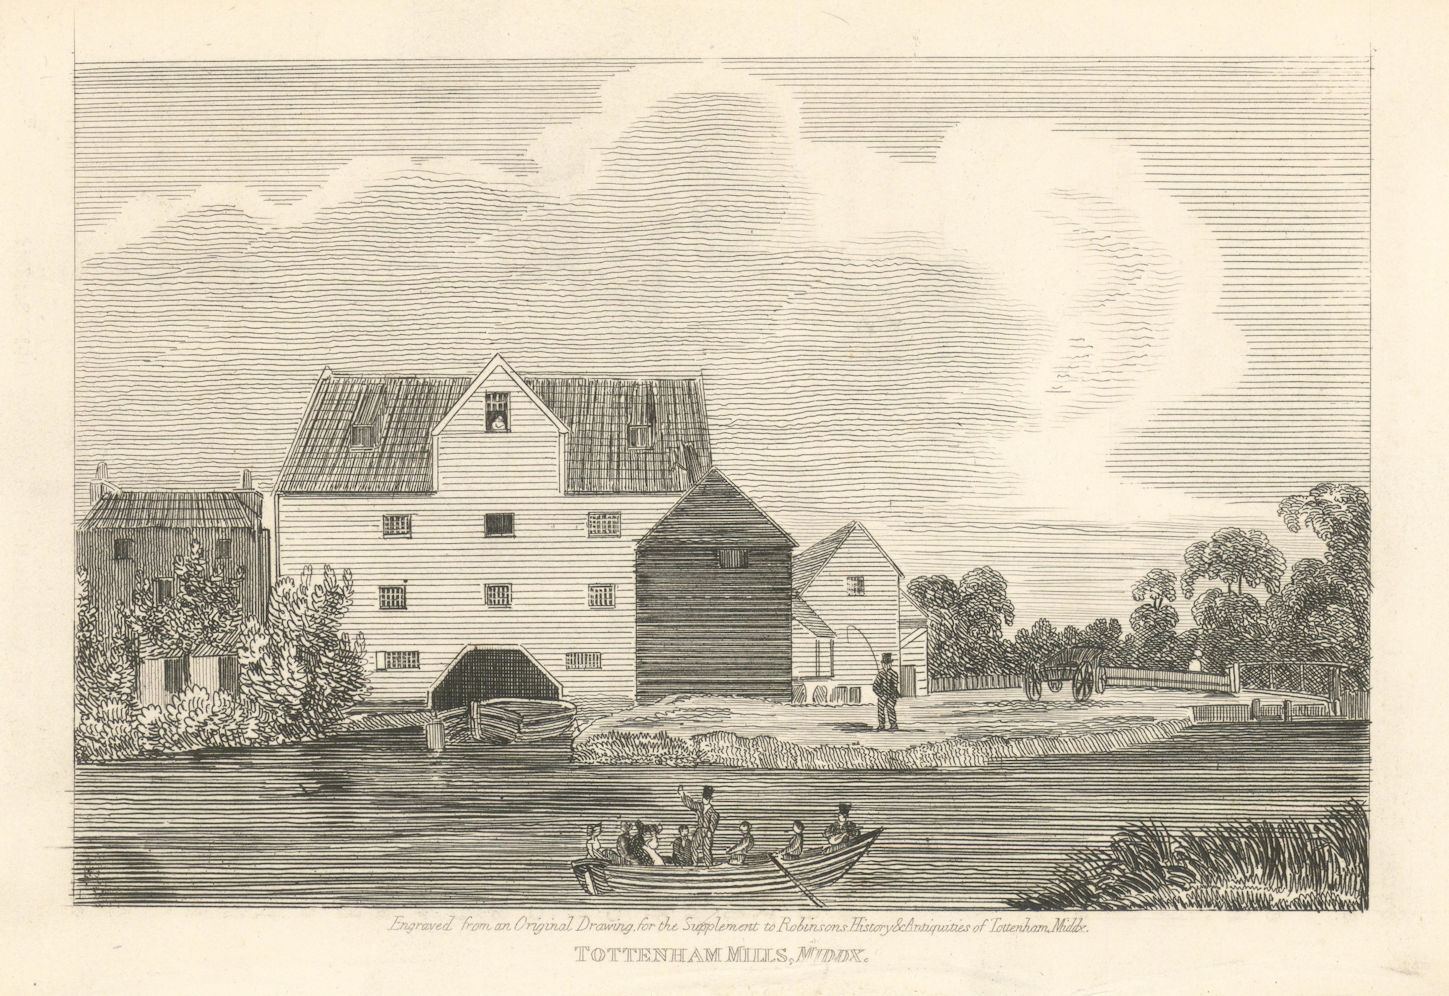 Tottenham Mills, Ferry Lane, Tottenham Hale, London 1840 old antique print